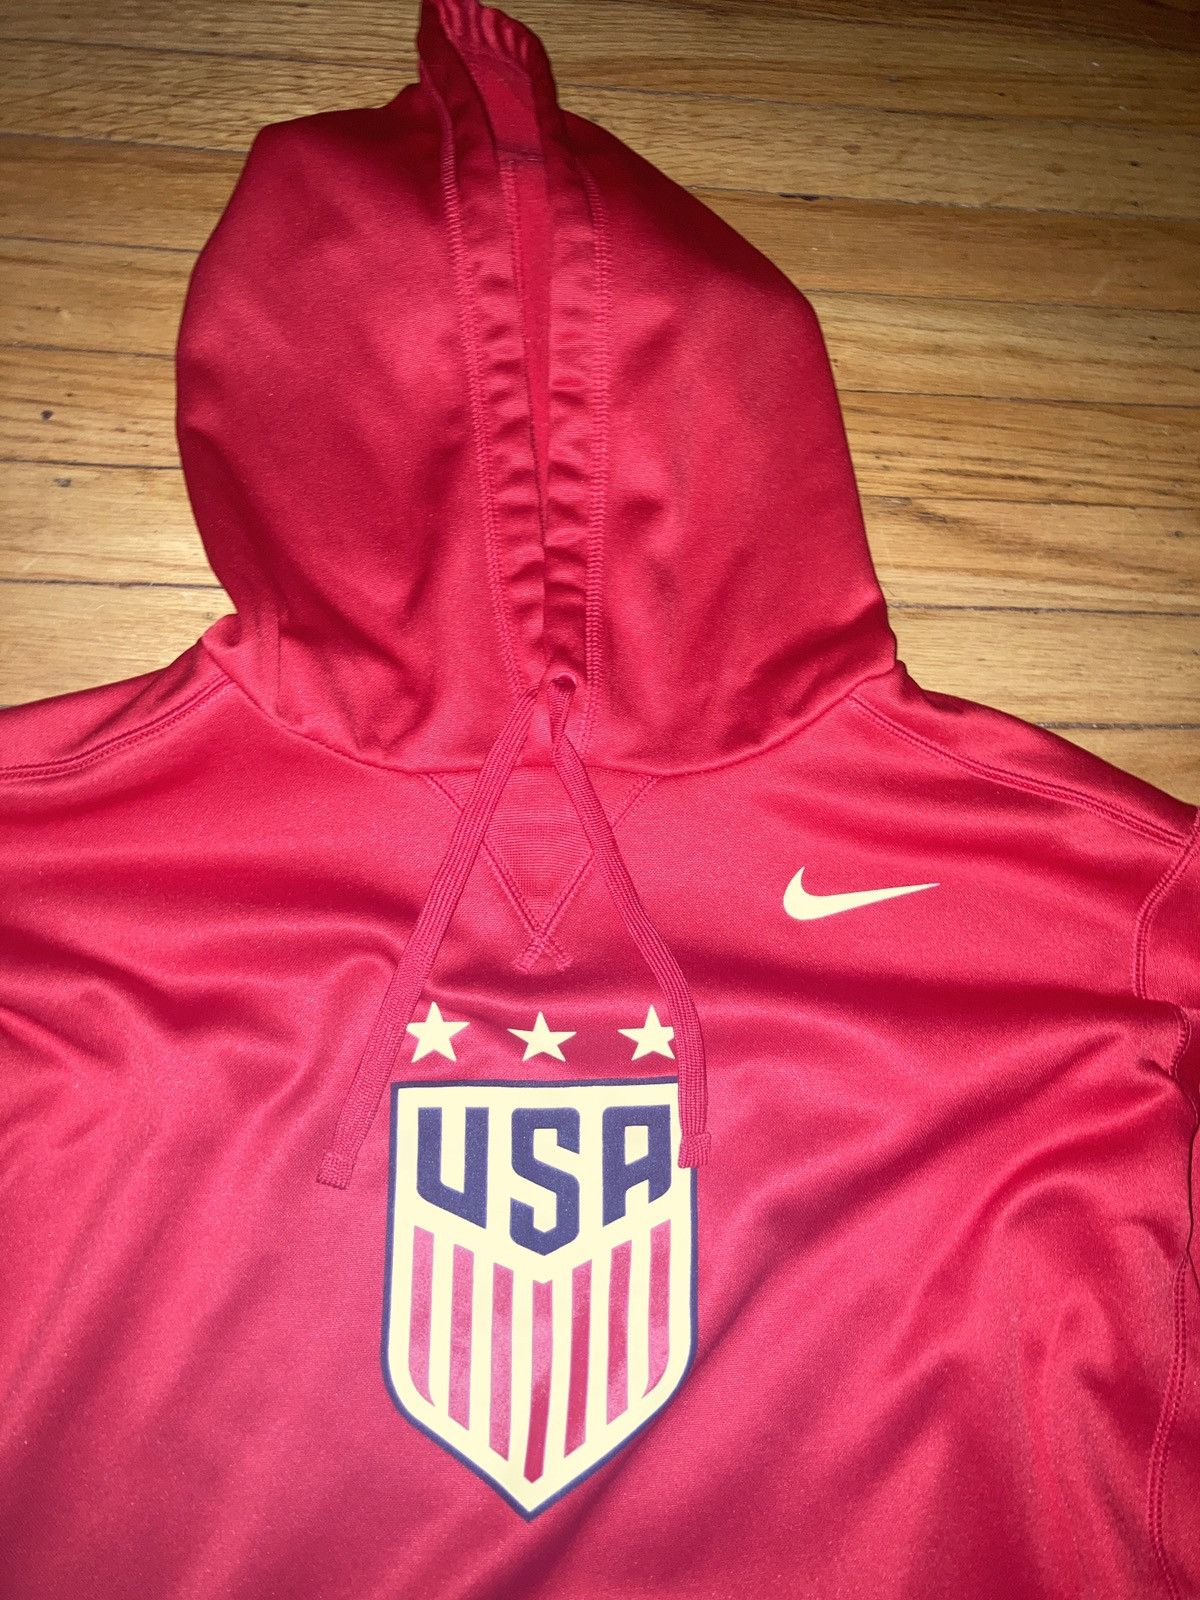 Nike Nike ( team USA ) hoodie 🌎 Size US L / EU 52-54 / 3 - 2 Preview